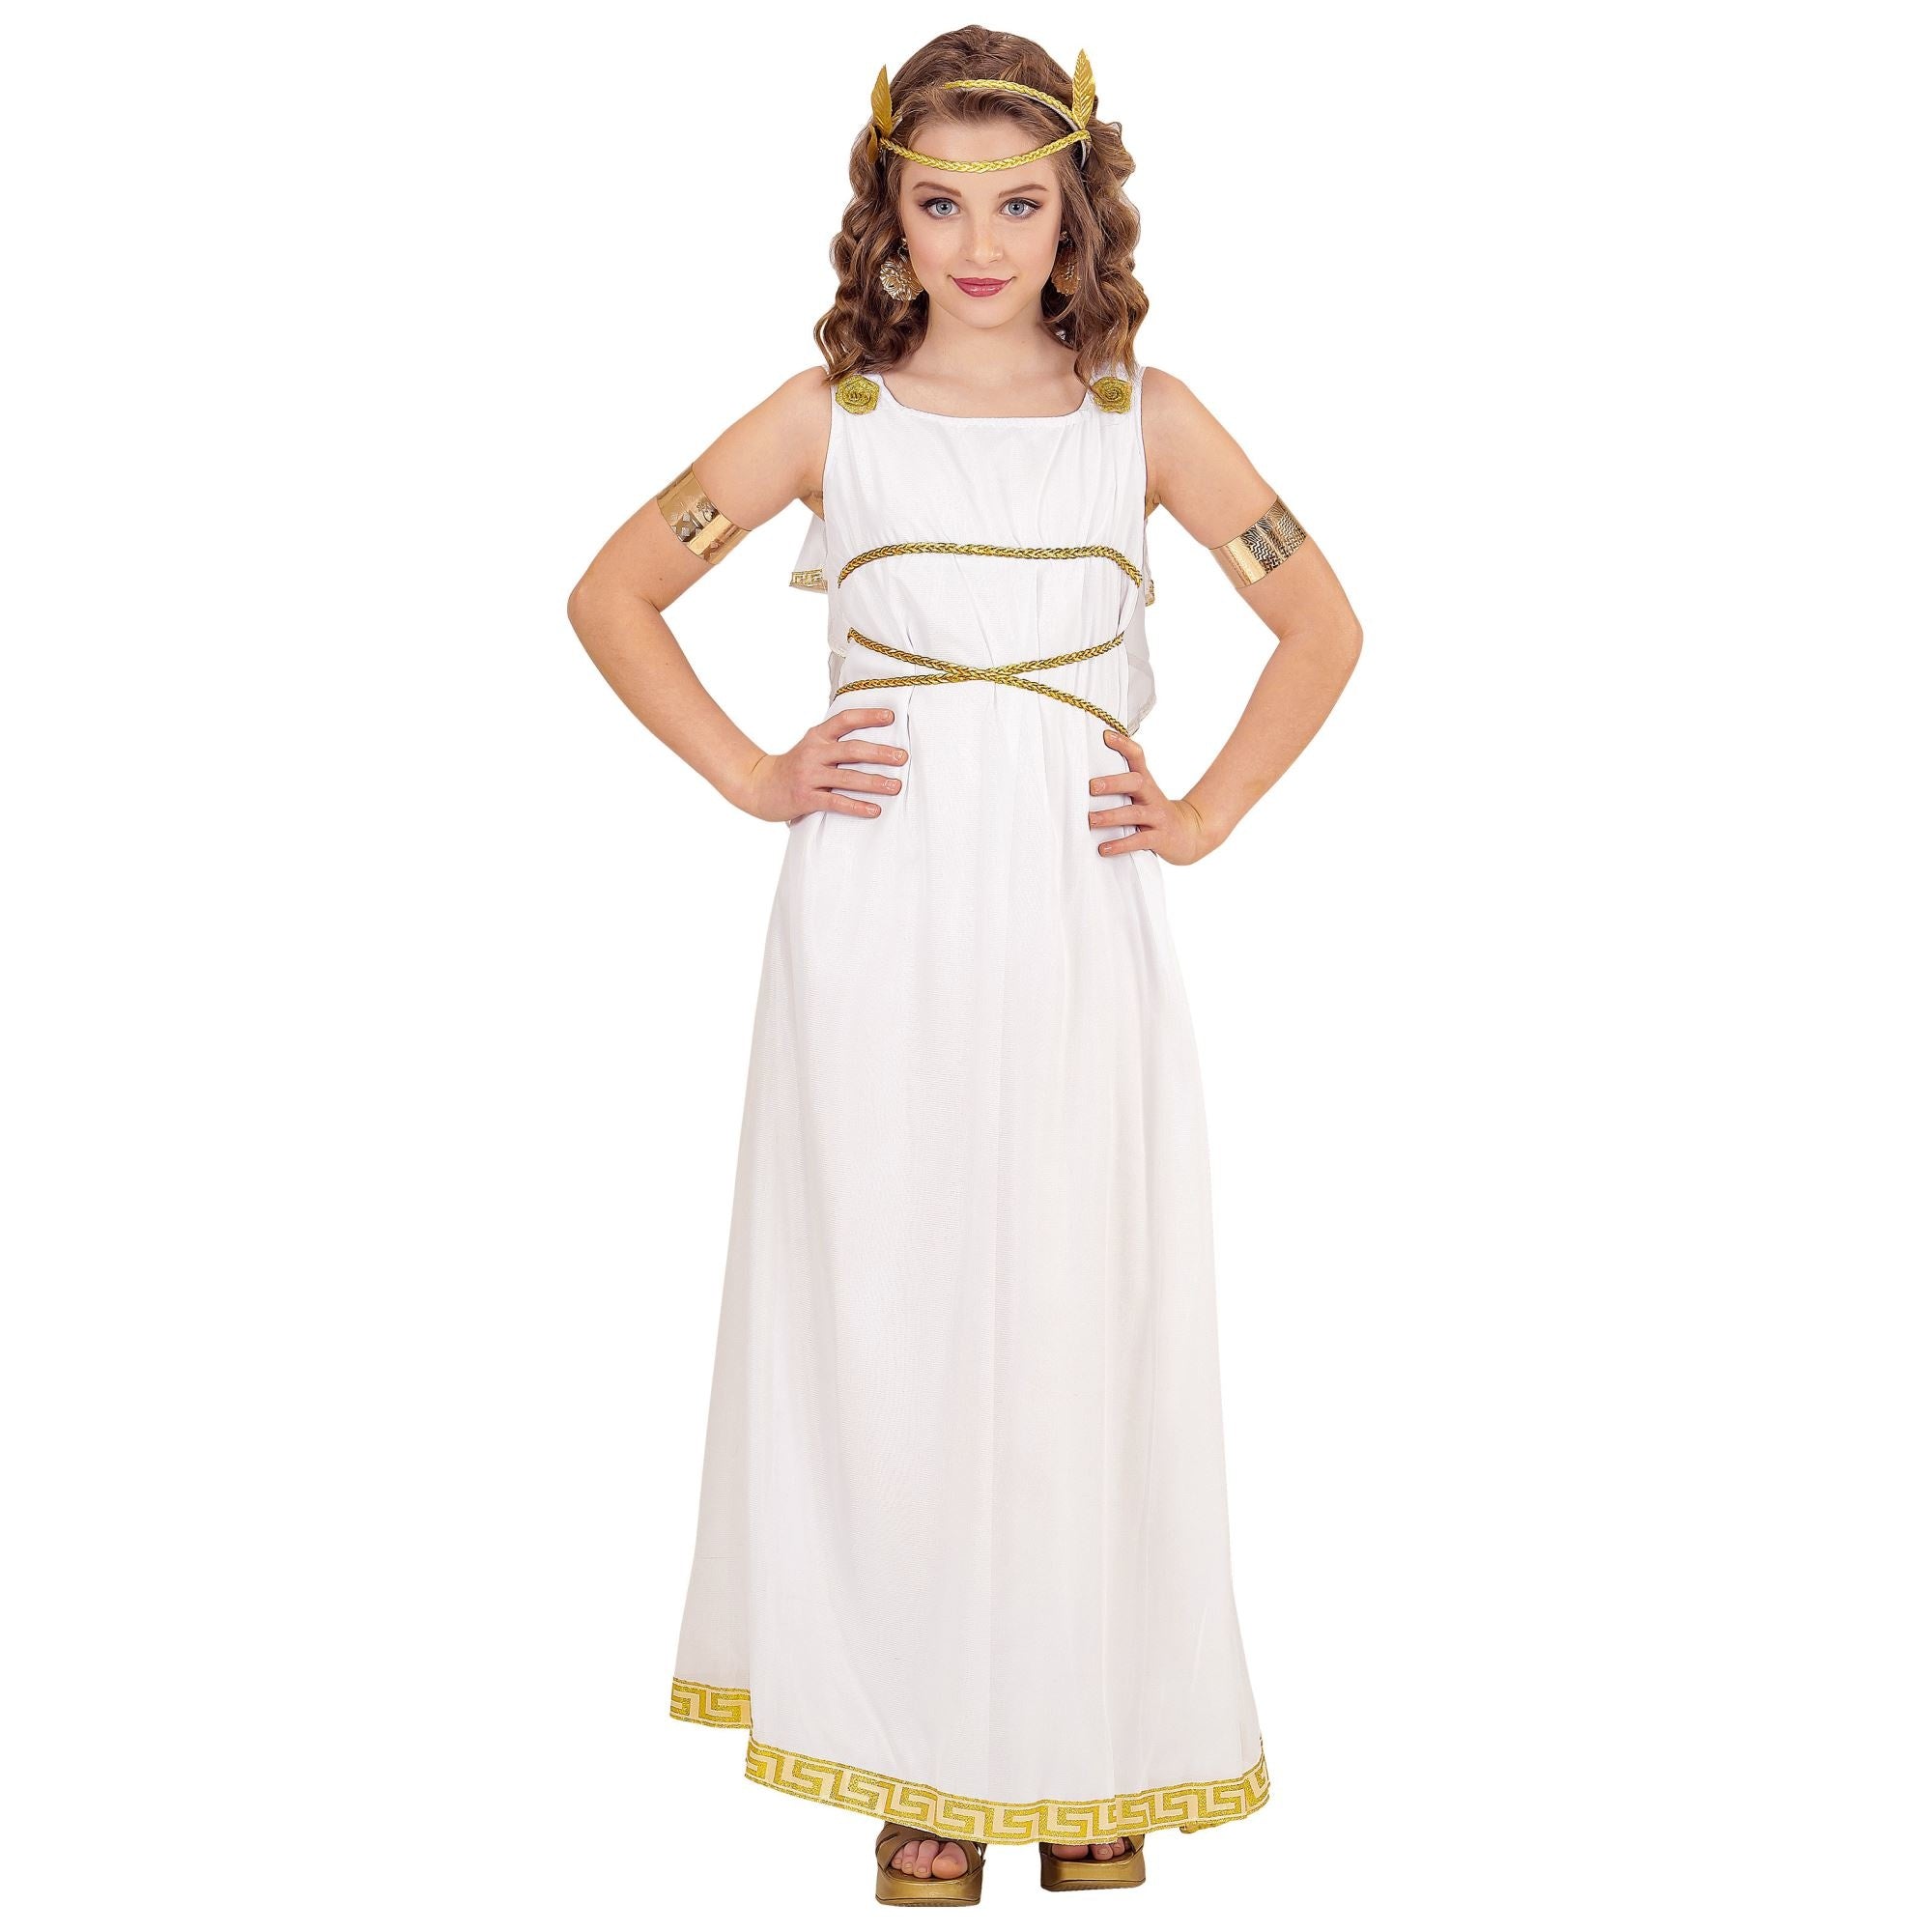 Widmann - Griekse & Romeinse Oudheid Kostuum - Griekse Godin Angelica - Meisje - wit / beige - Maat 158 - Carnavalskleding - Verkleedkleding